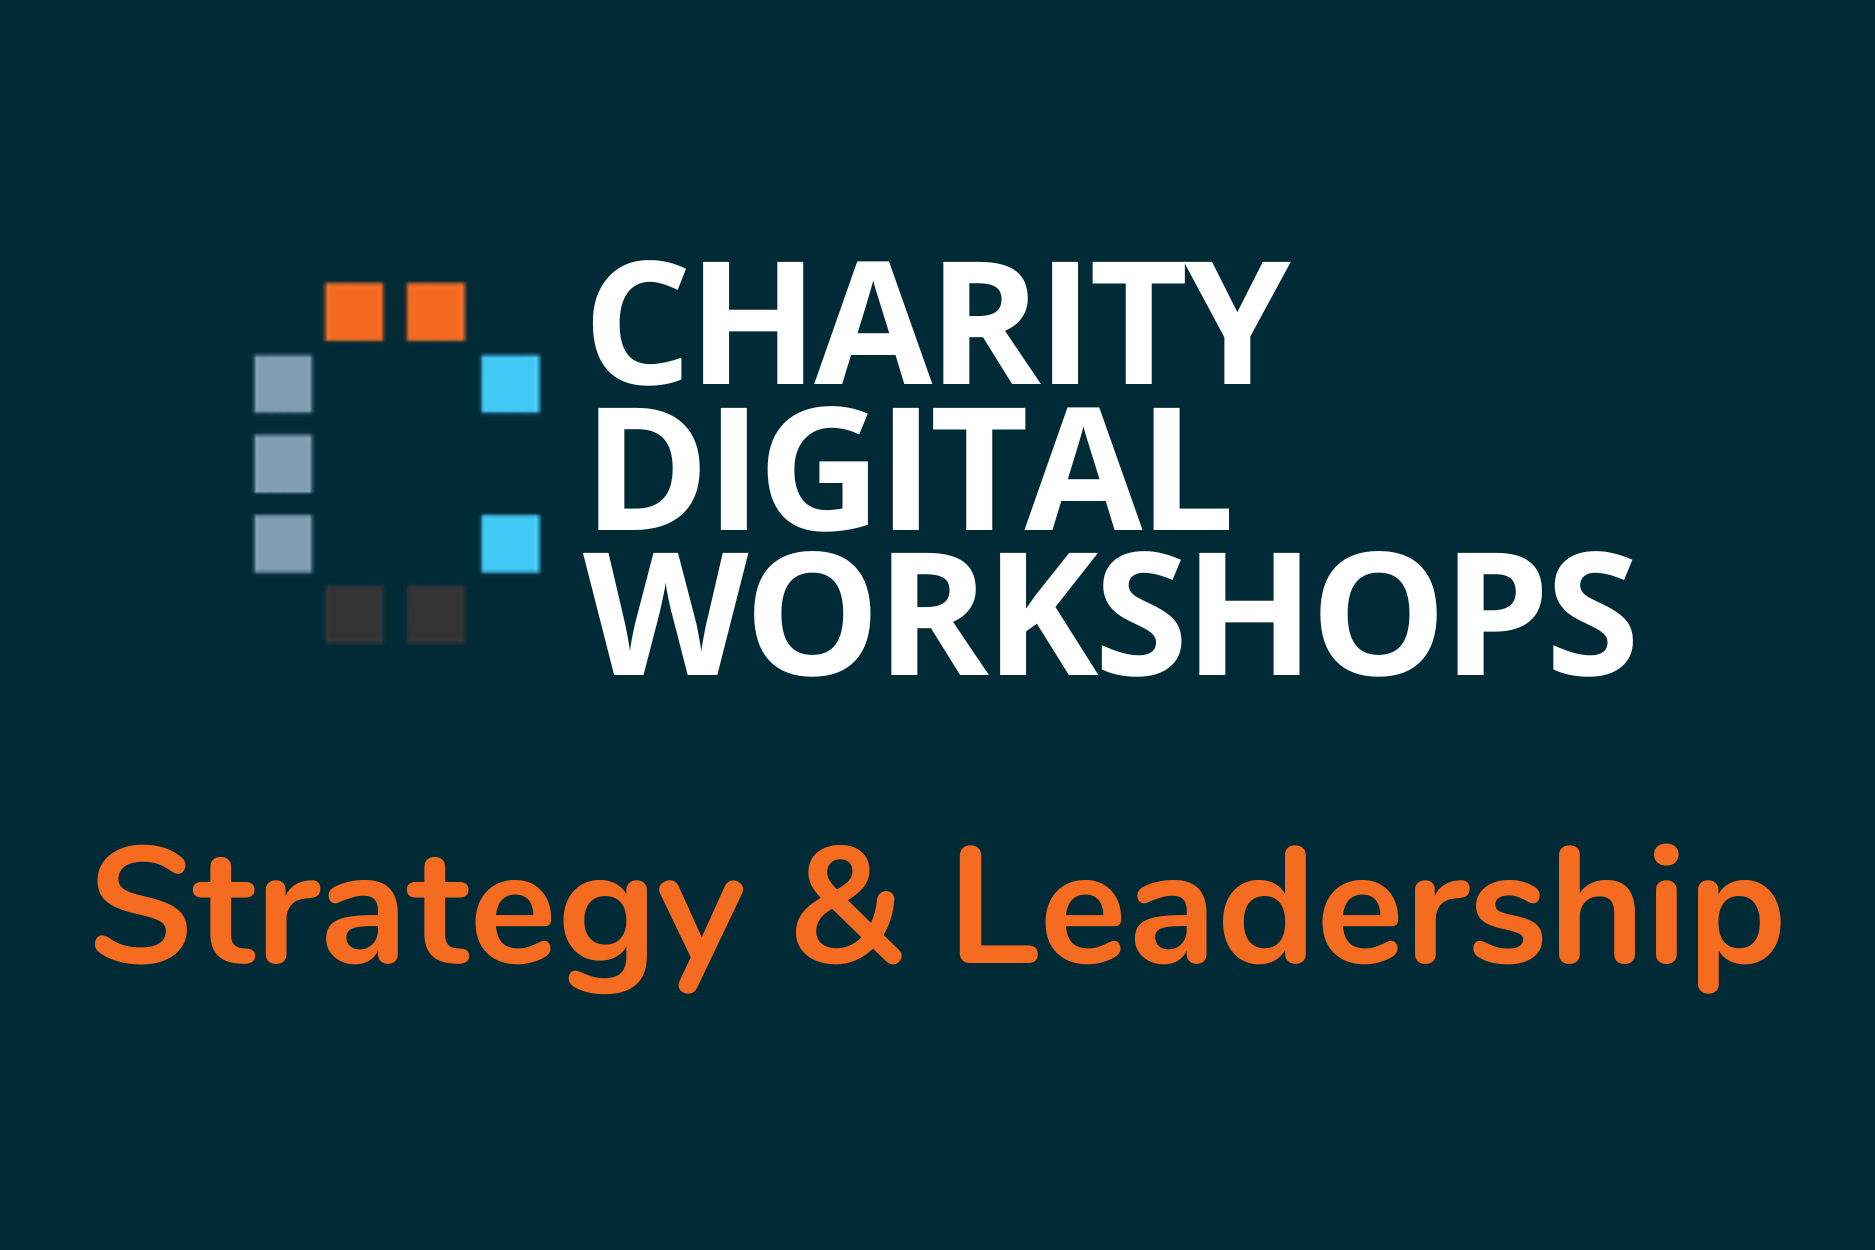 Charity Digital Workshops: Strategy & Leadership